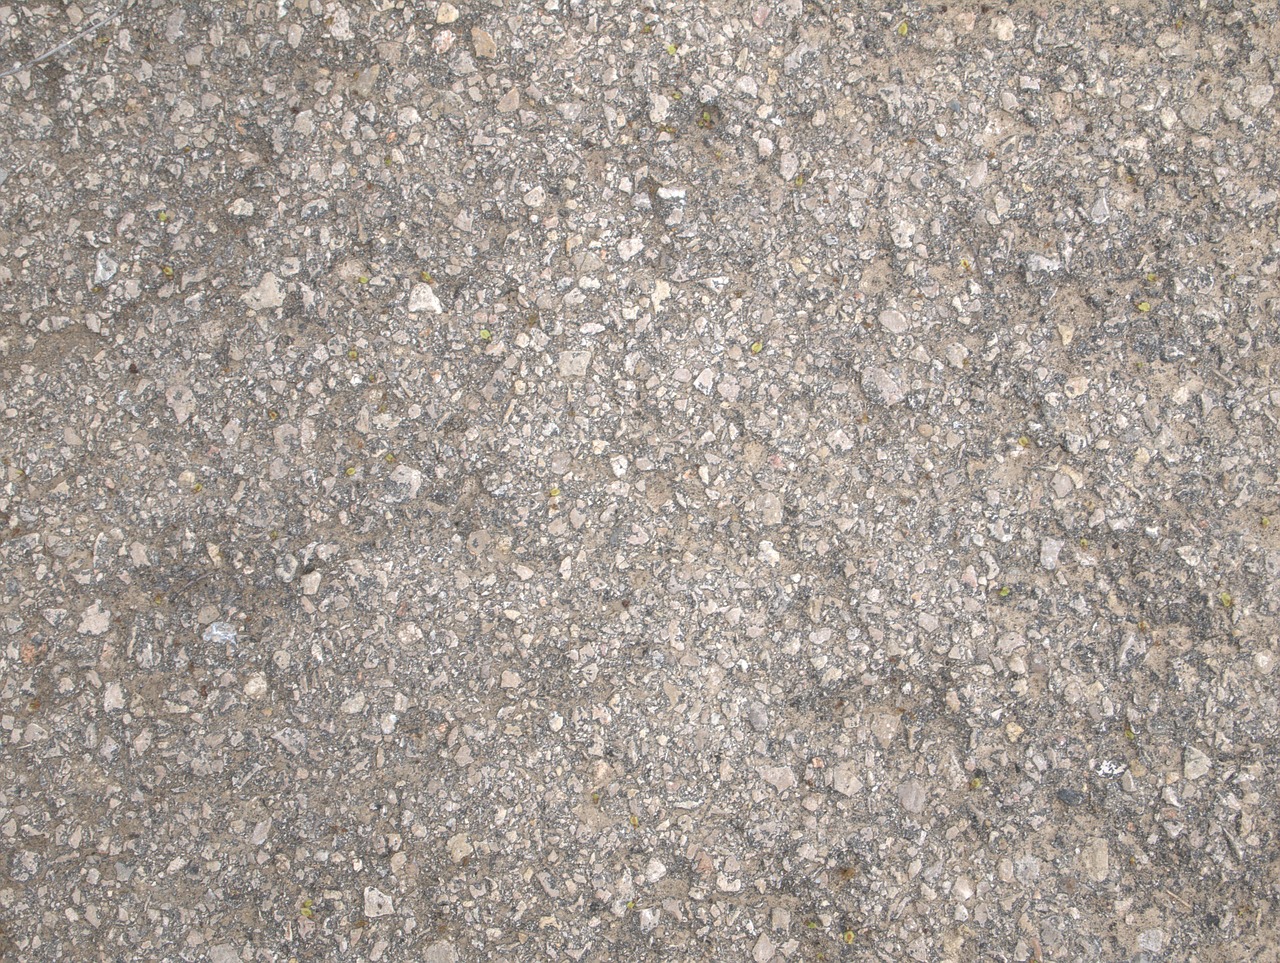 soil asphalt path free photo